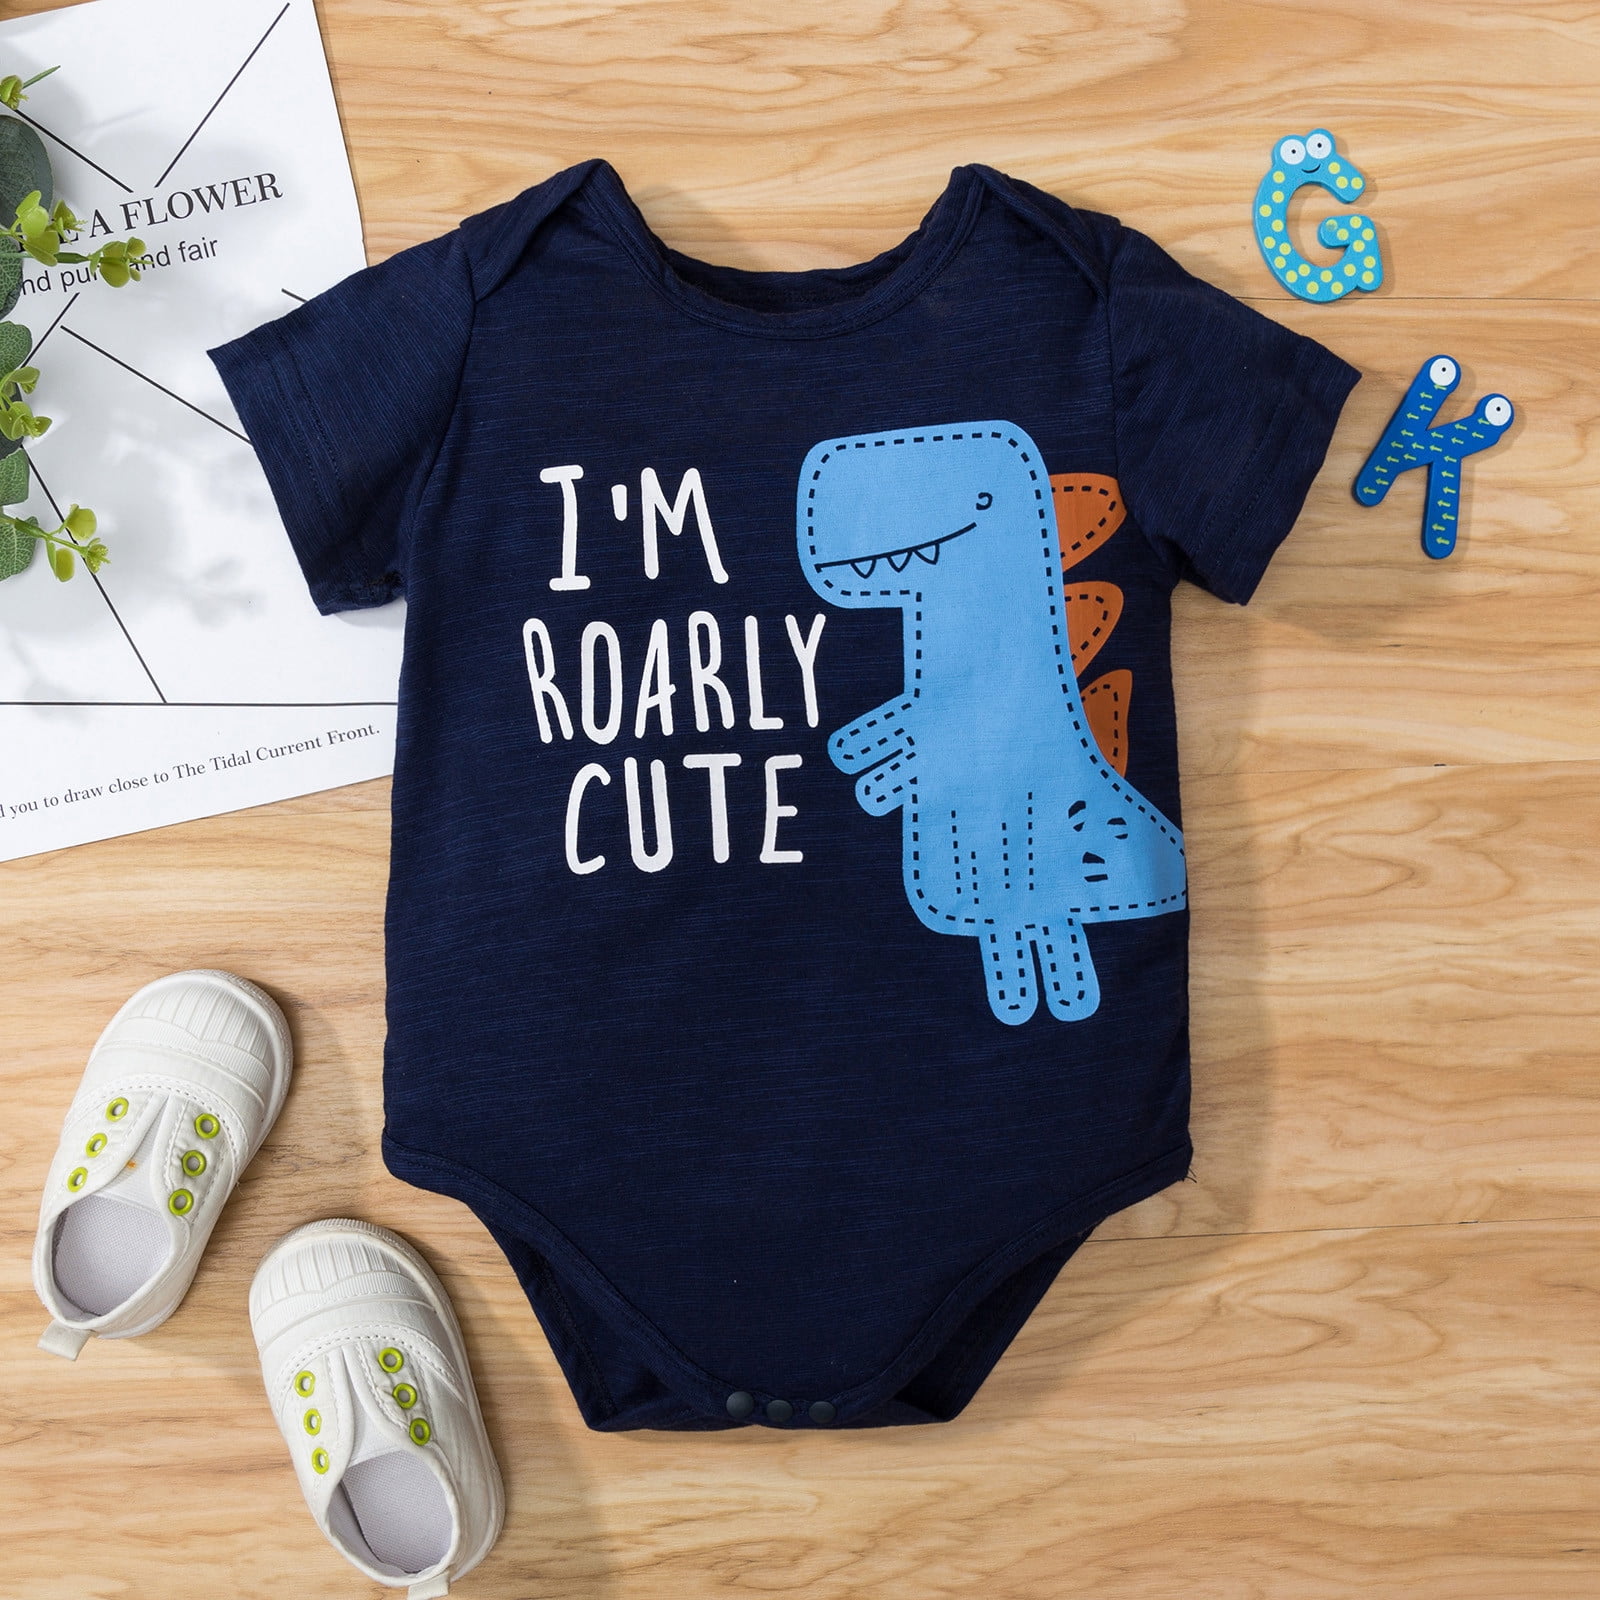 Blue Dinosaur Little Brother Bodysuit Printed Gift Top Pregnancy Reveal Babygrow